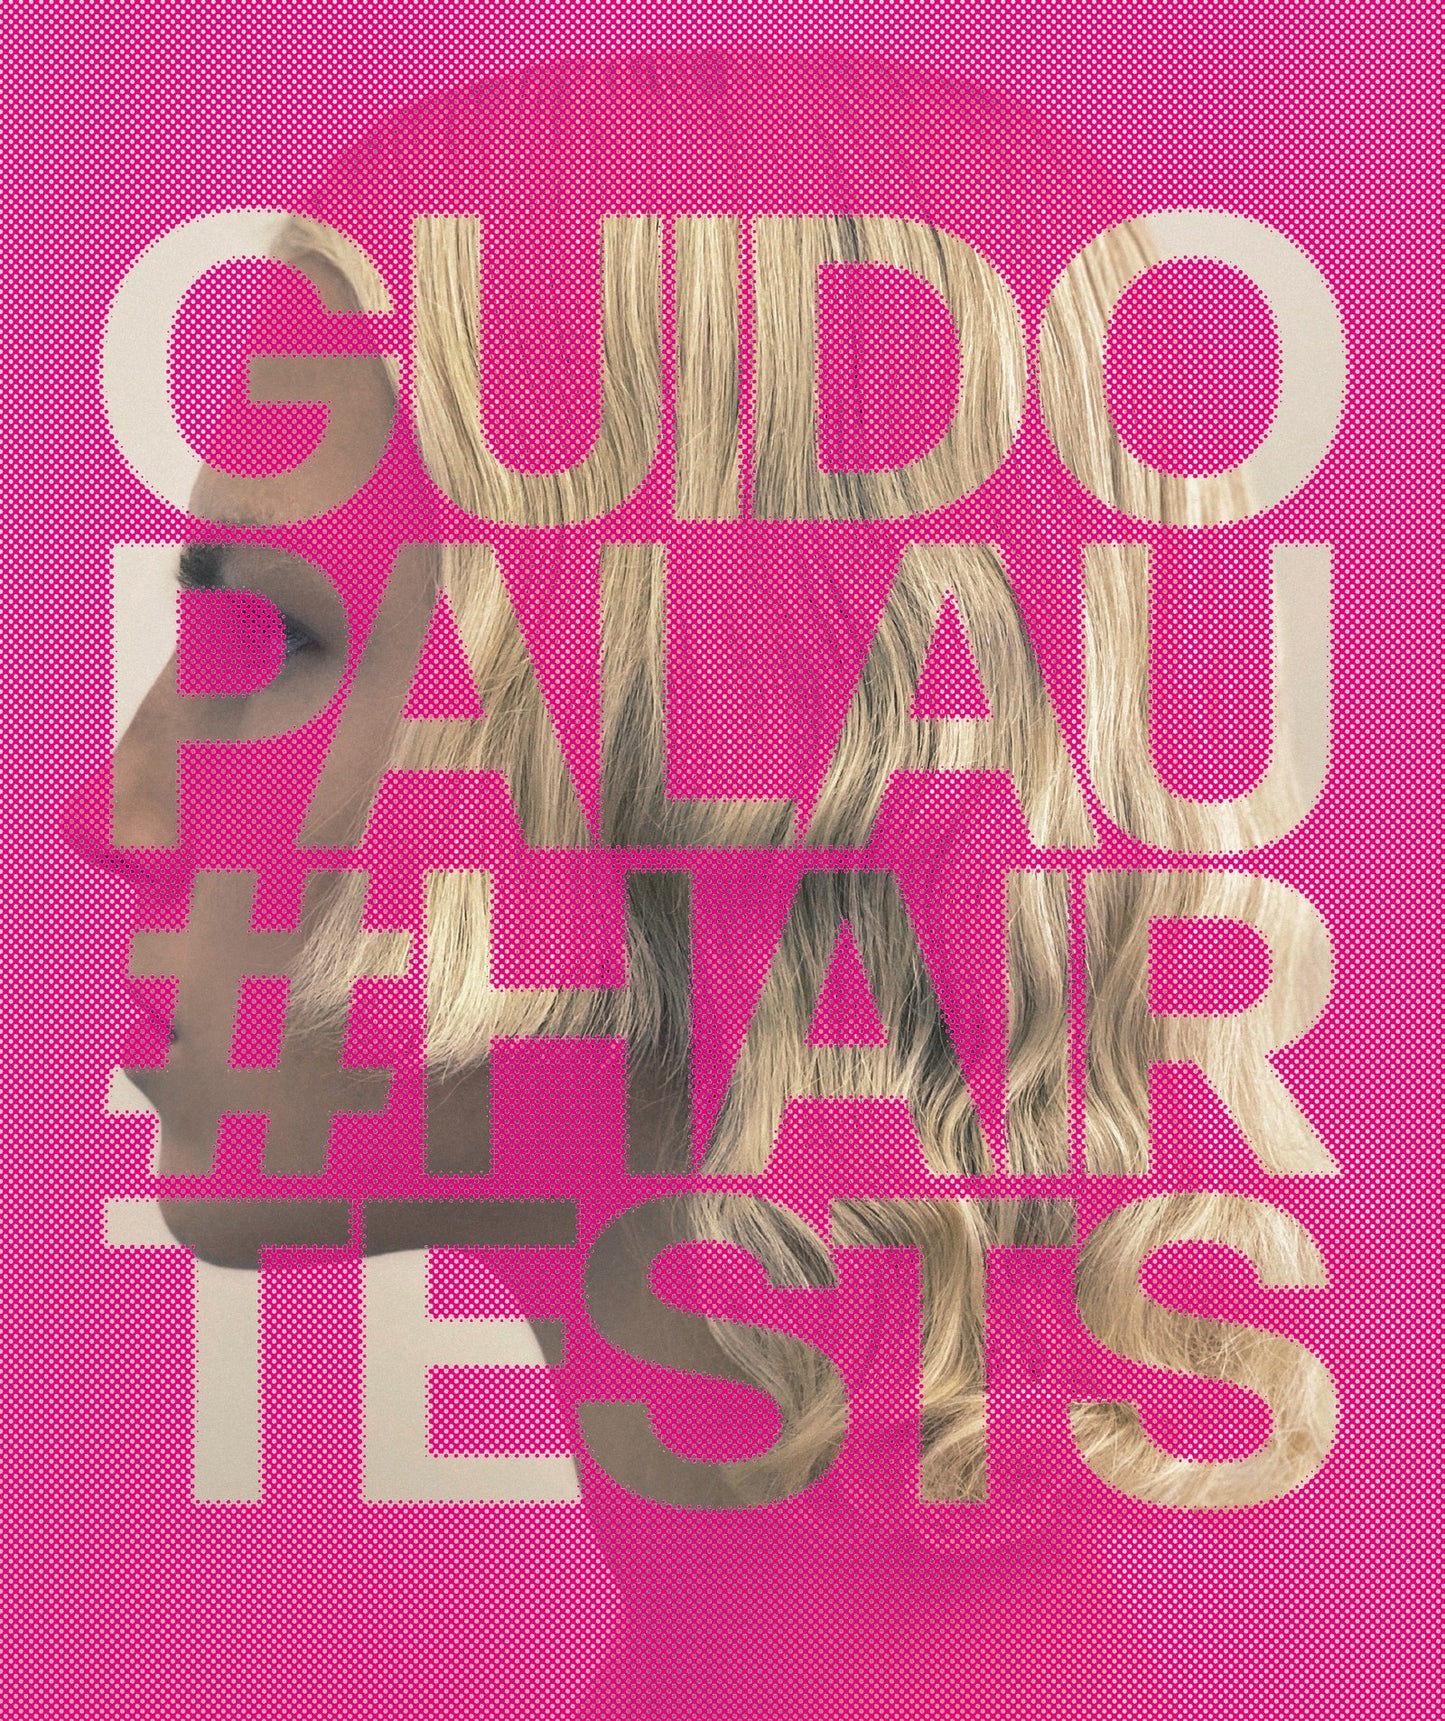 Guido Palau - #Hairtests